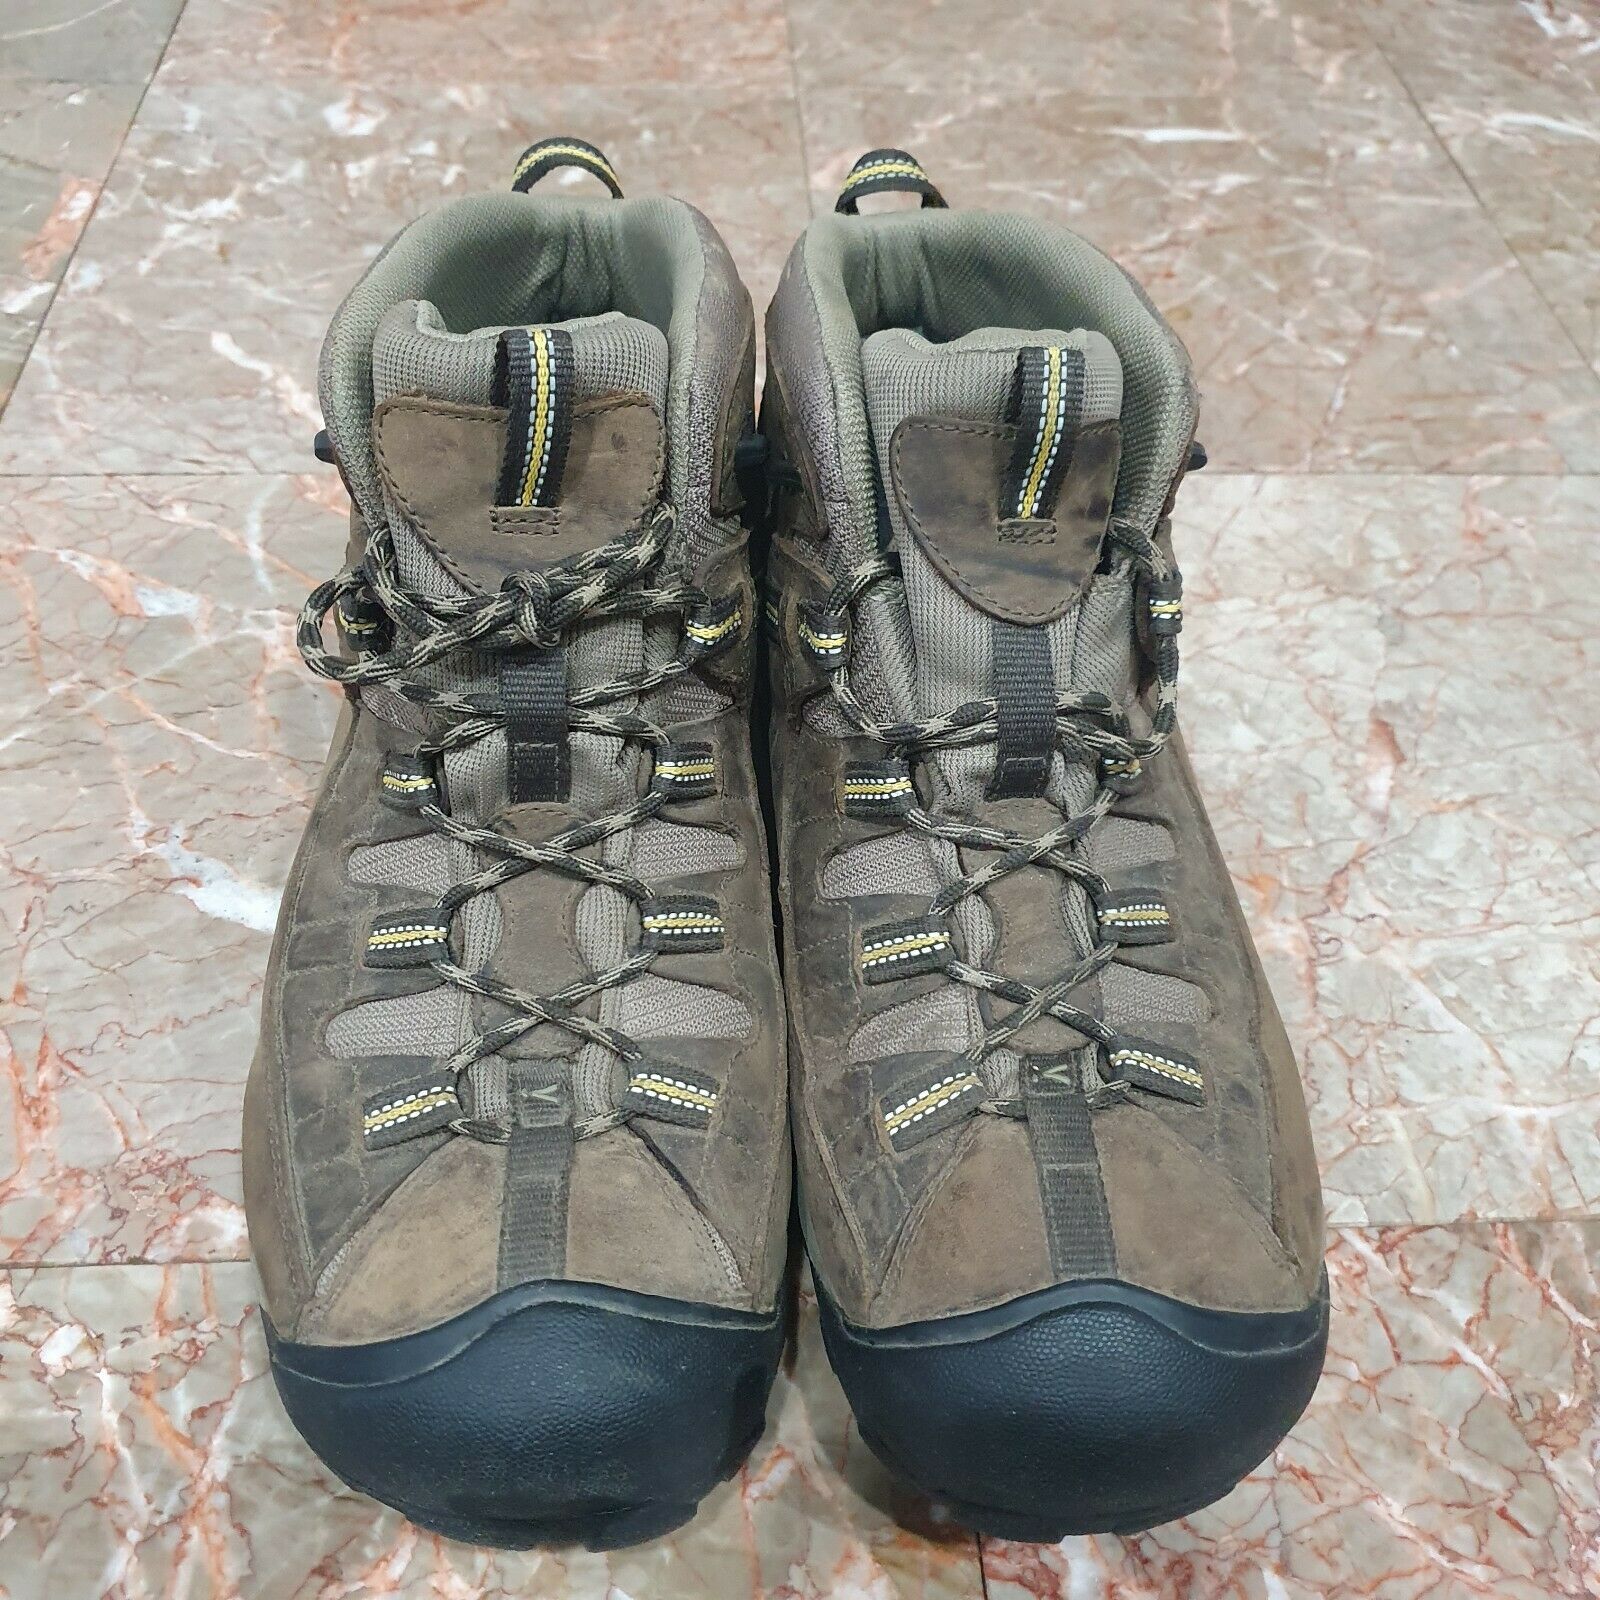 Keen Targhee II Mid Waterproof Hiking Boots Black Olive/Yellow Men’s Size 14